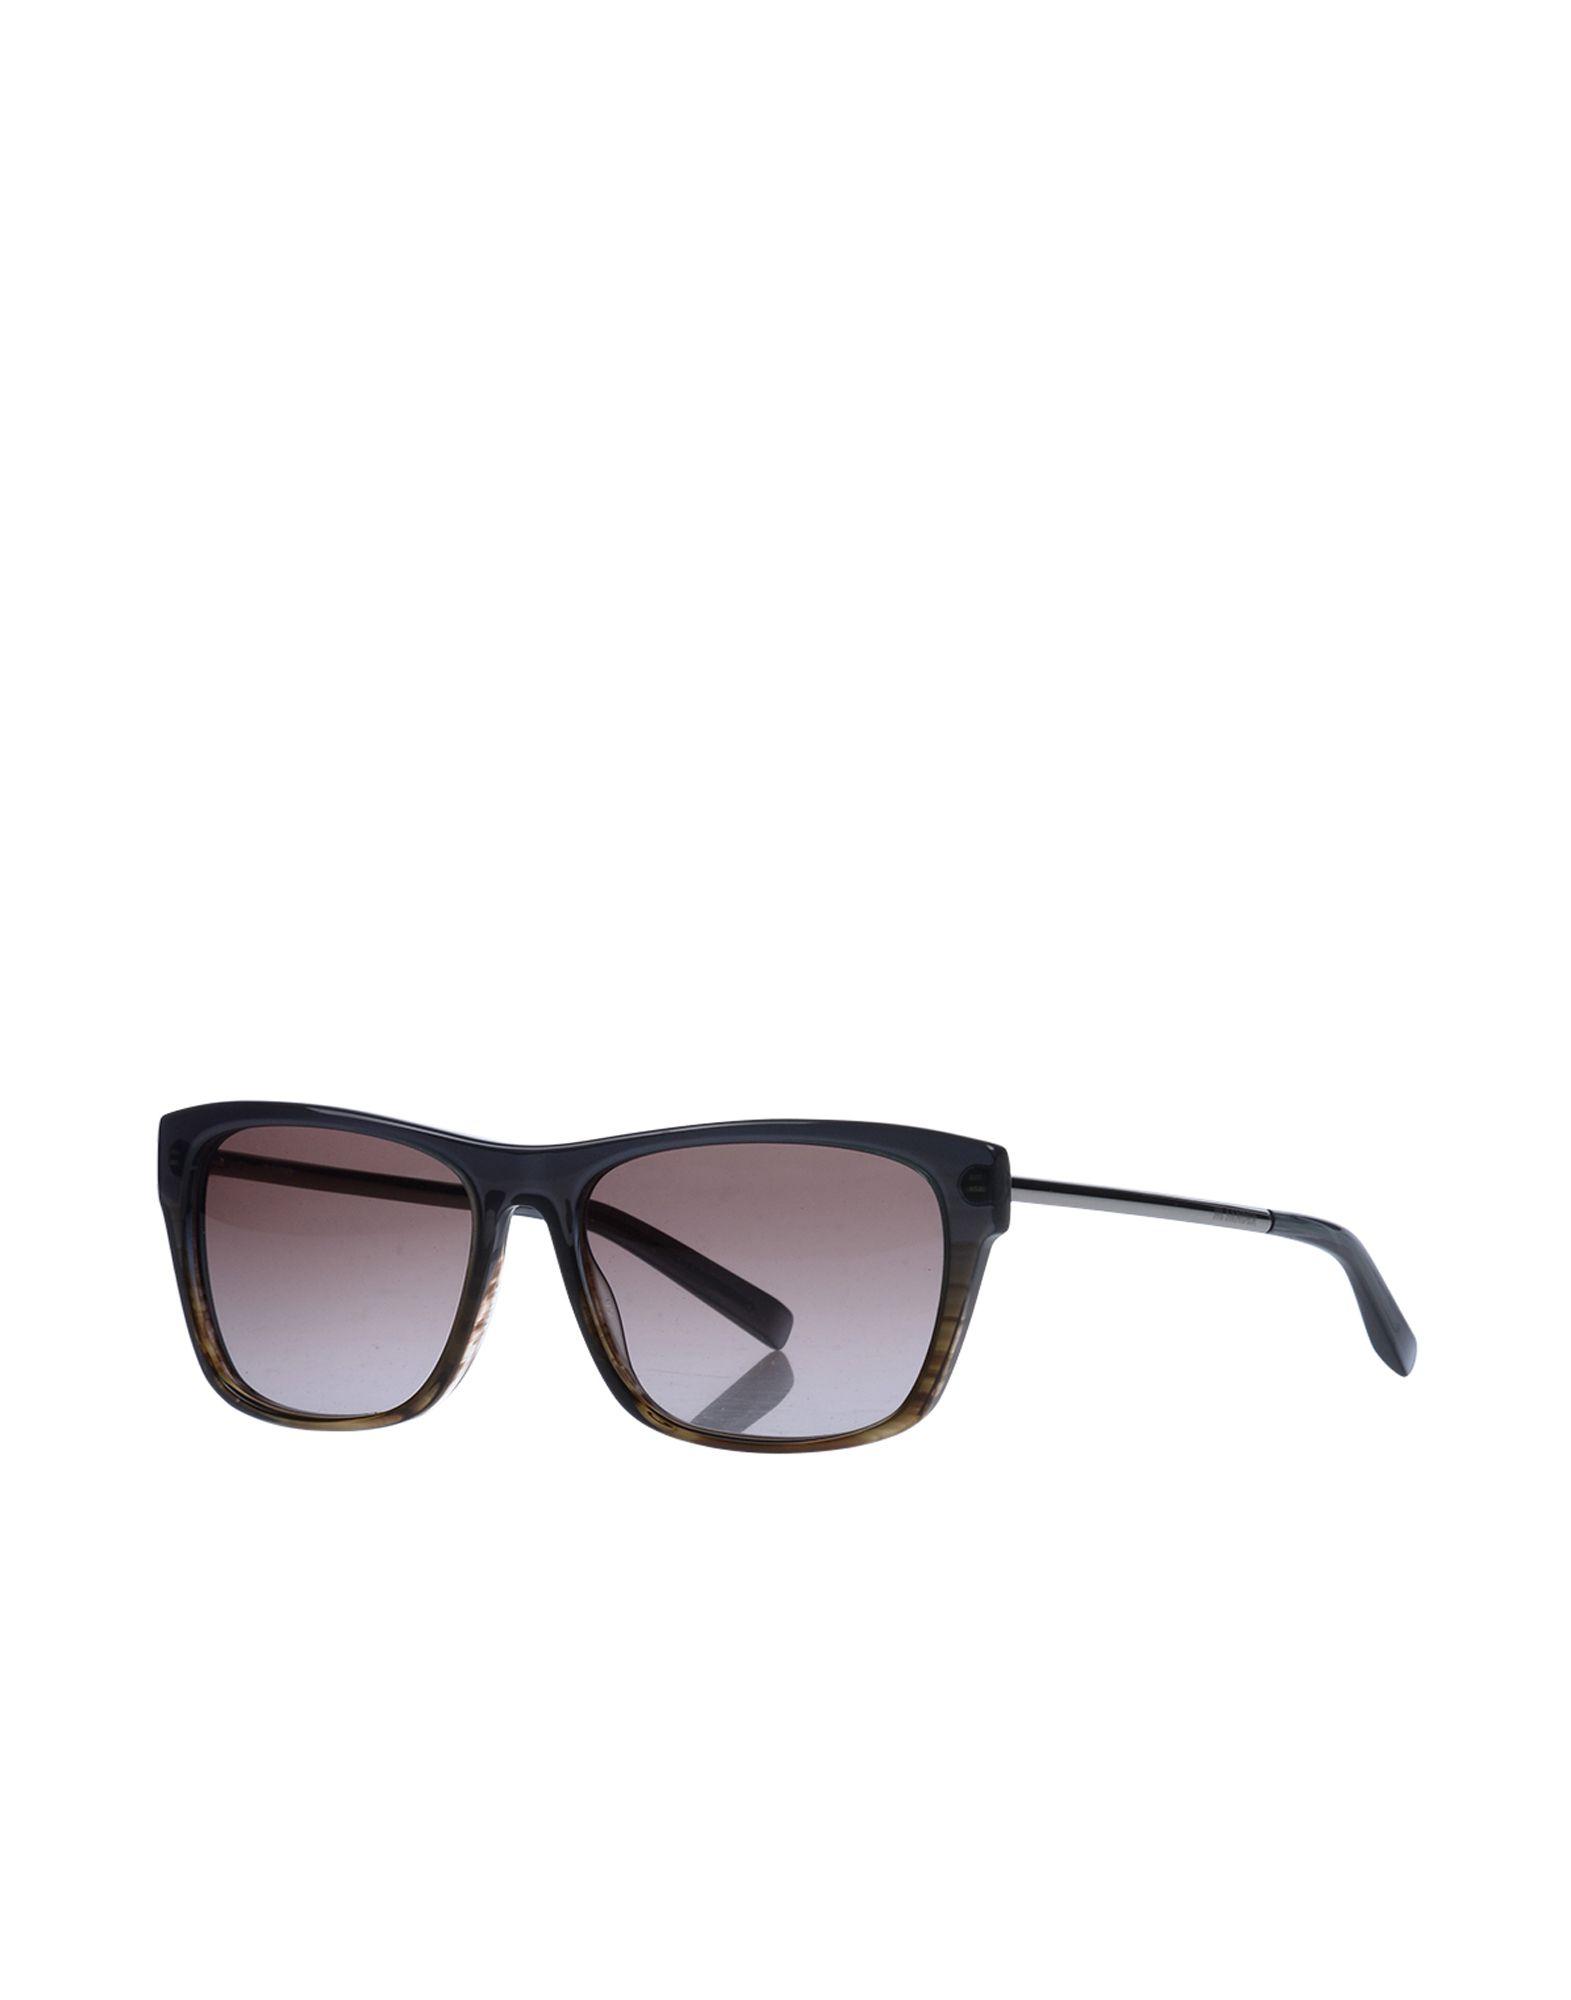 Jil Sander Sunglasses in Black - Lyst